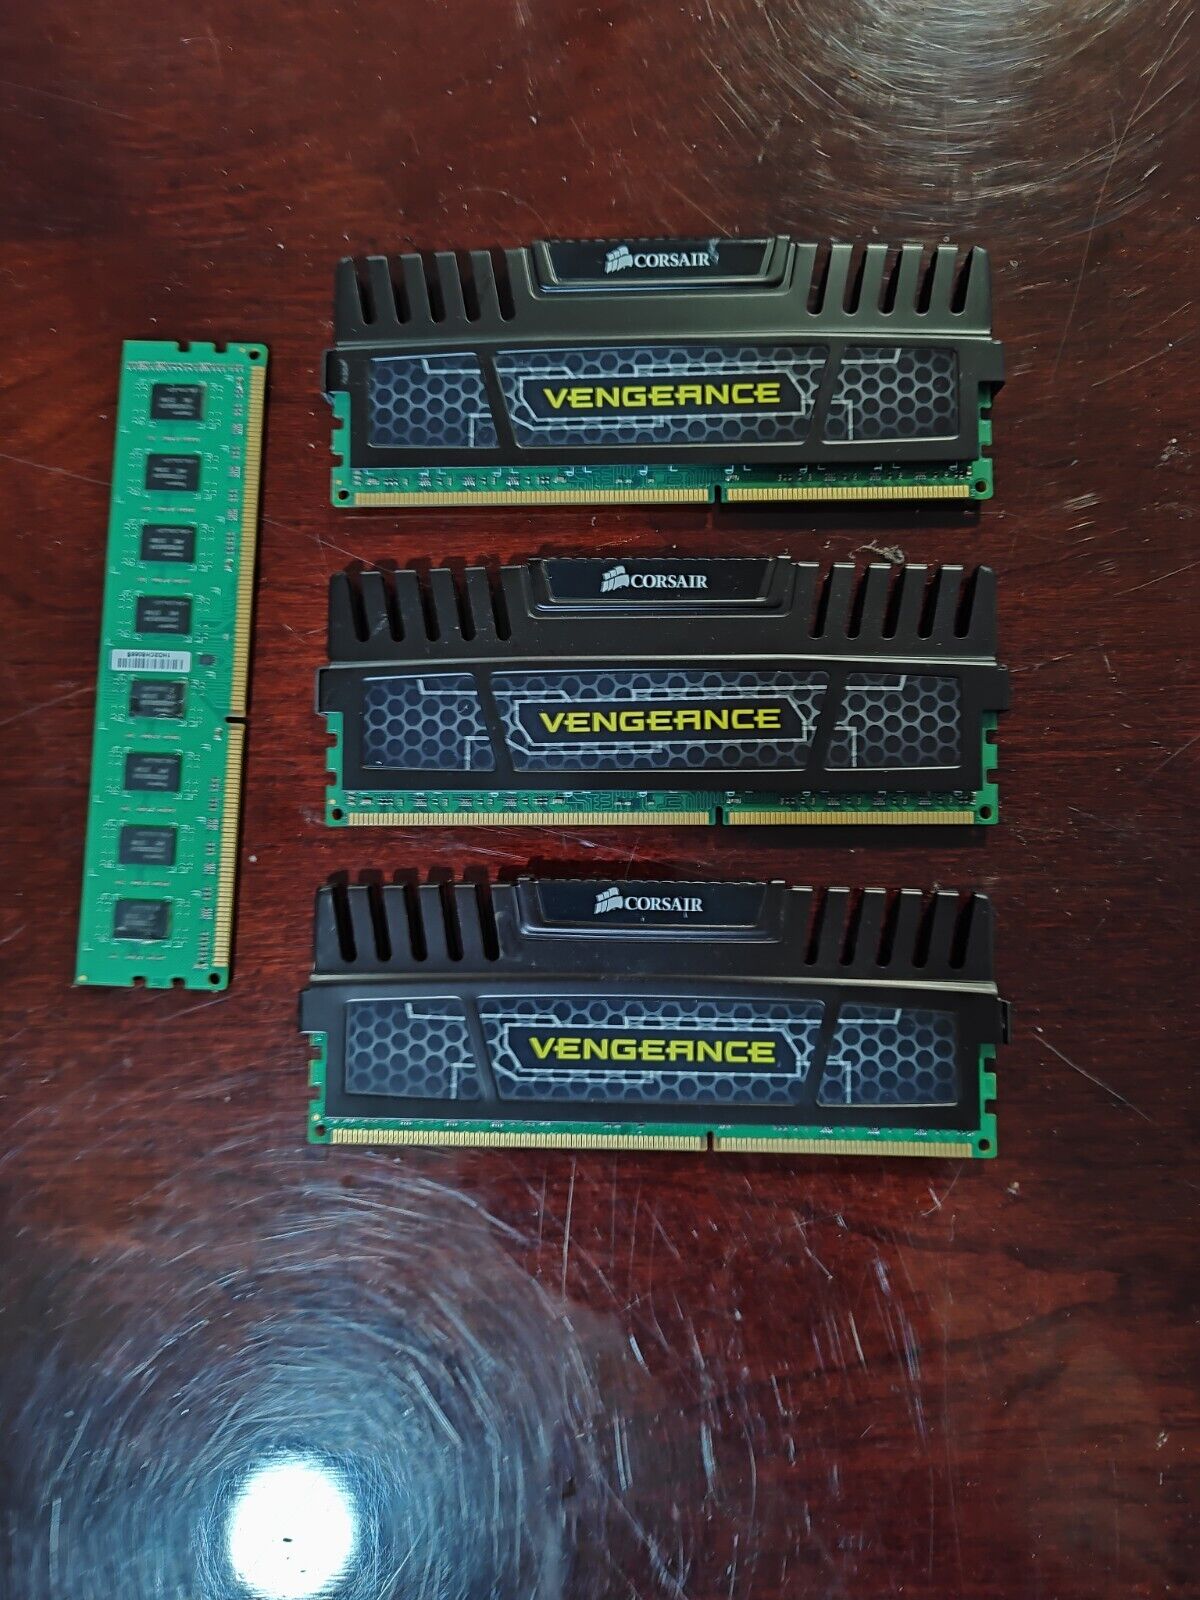 Corsair Vengeance 16gb (4x 4gb) 1866MHz DDR3 RAM Memory